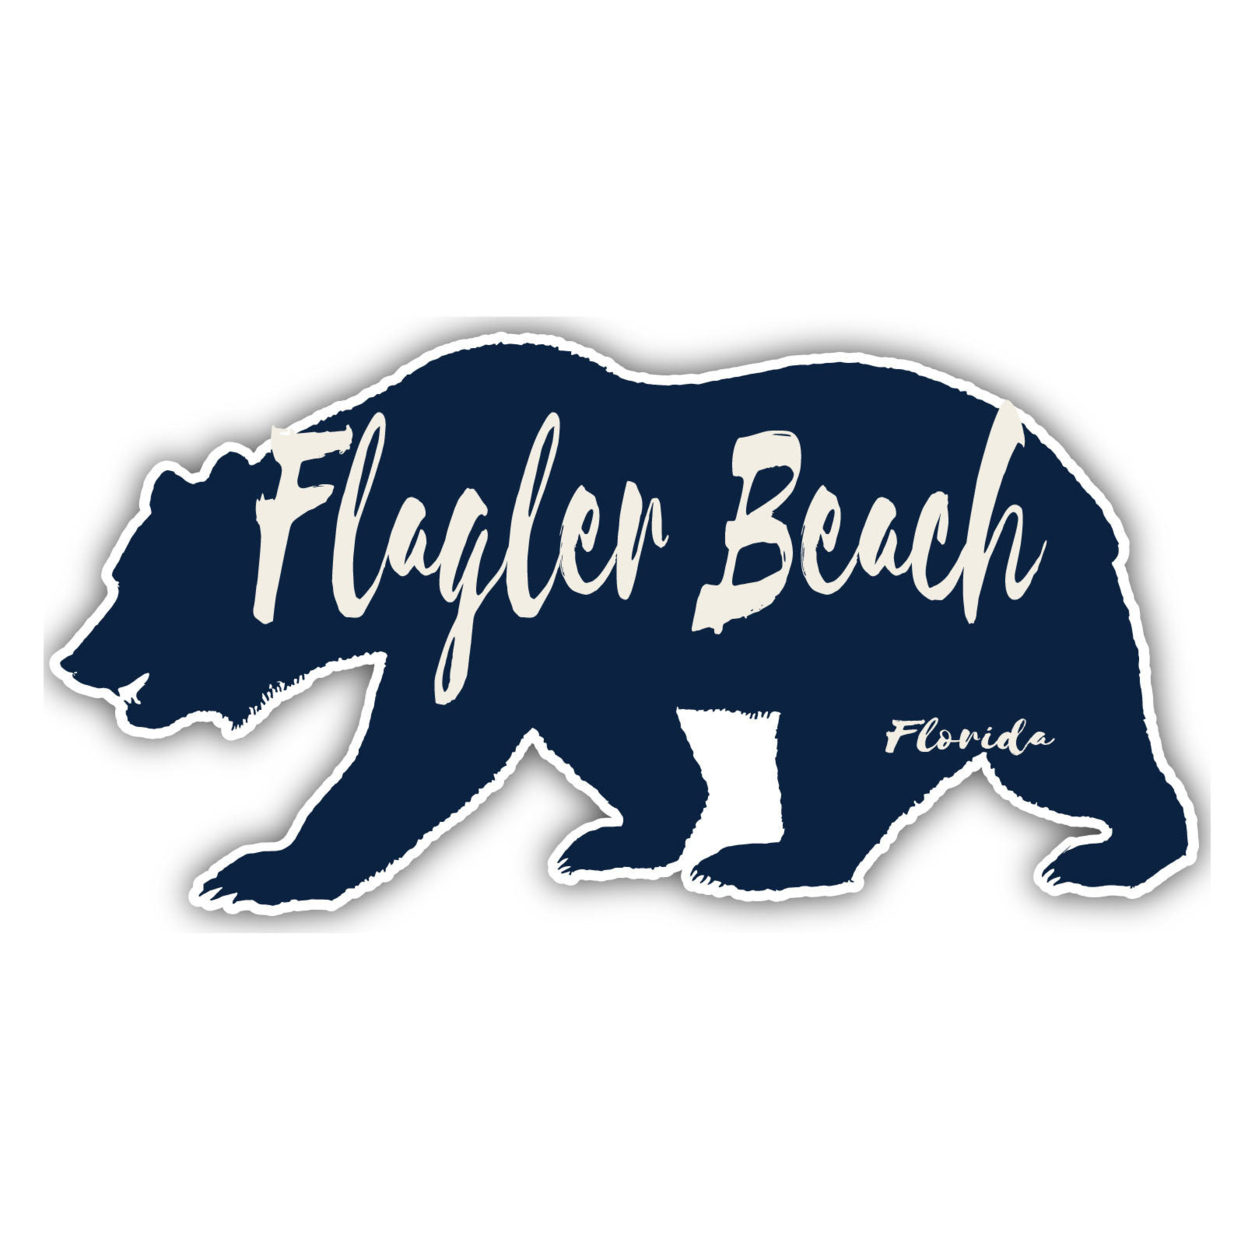 Flagler Beach Florida Souvenir Decorative Stickers (Choose Theme And Size) - Single Unit, 8-Inch, Tent